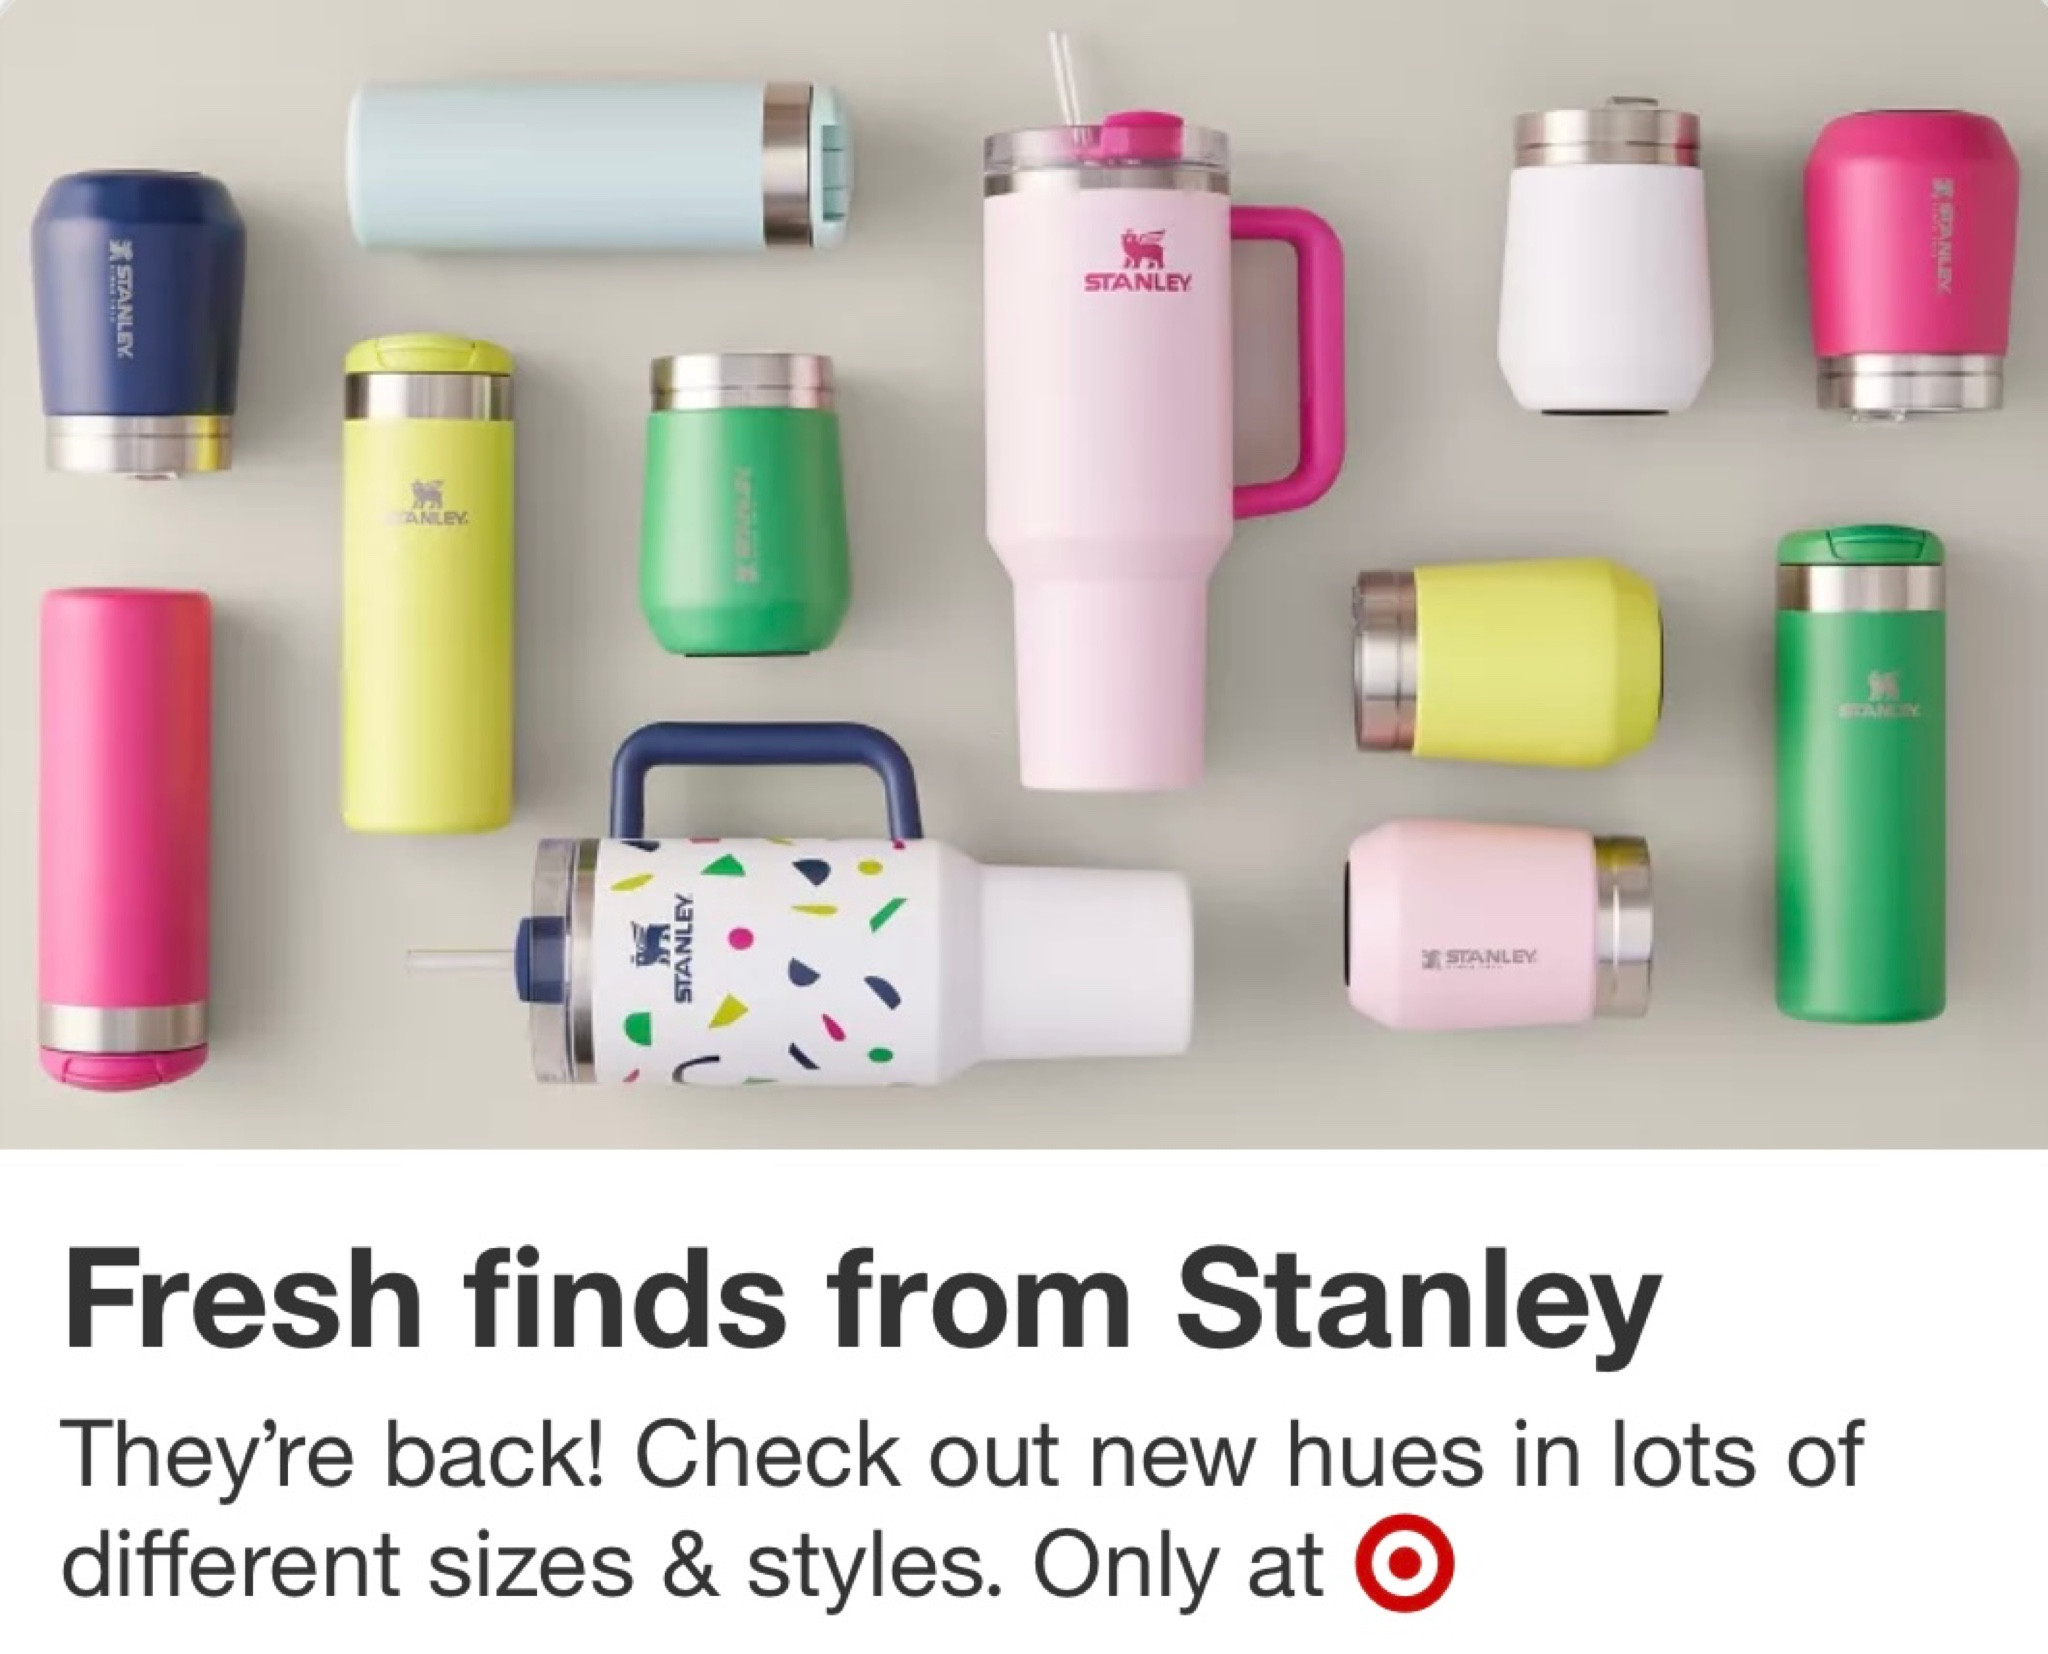 Best Stanley deal: save 25% on Stanley AeroLight bottles at Target